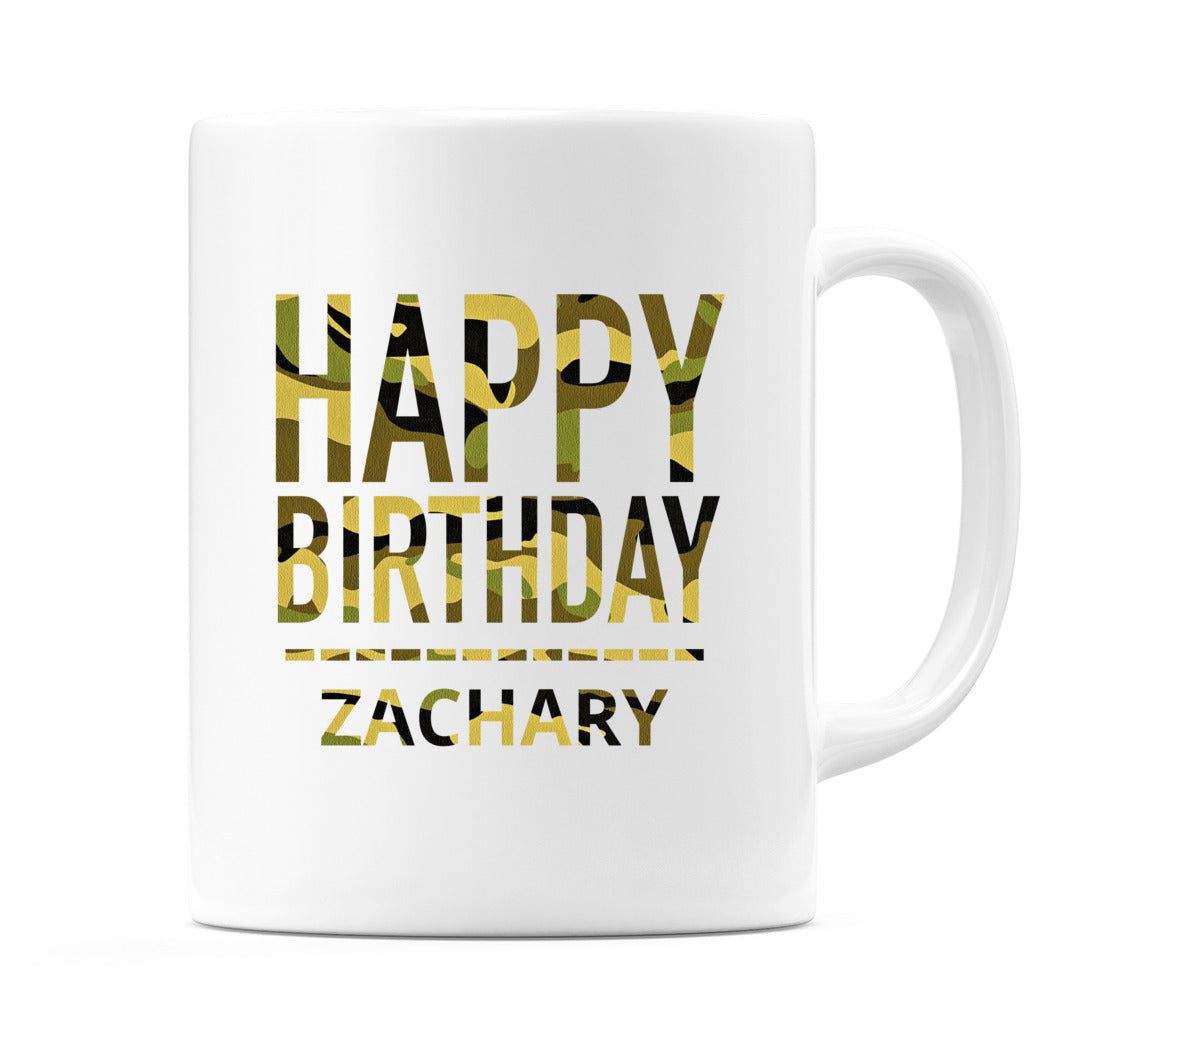 Happy Birthday Zachary (Camo) Mug Cup by WeDoMugs